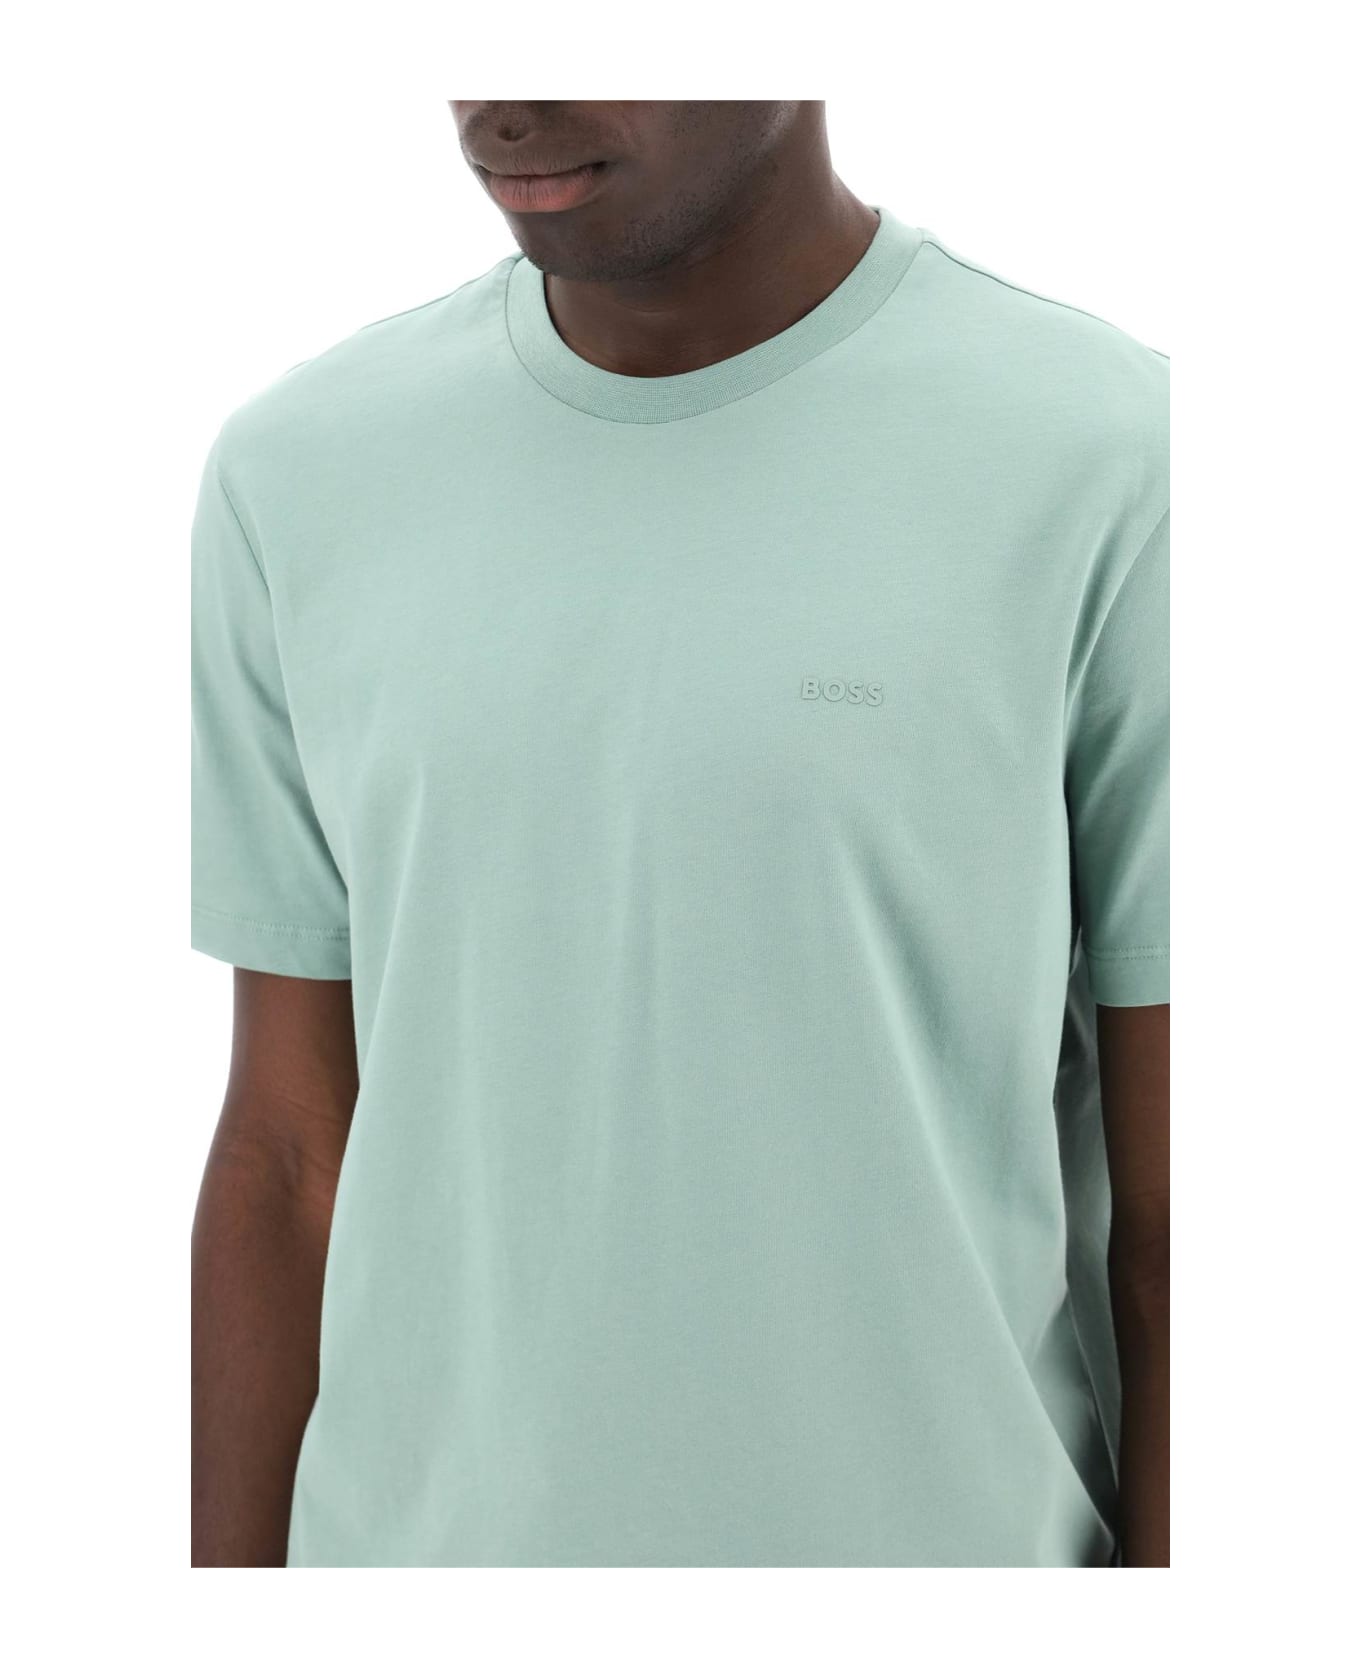 Hugo Boss Thompson T-shirt - OPEN GREEN (Green)